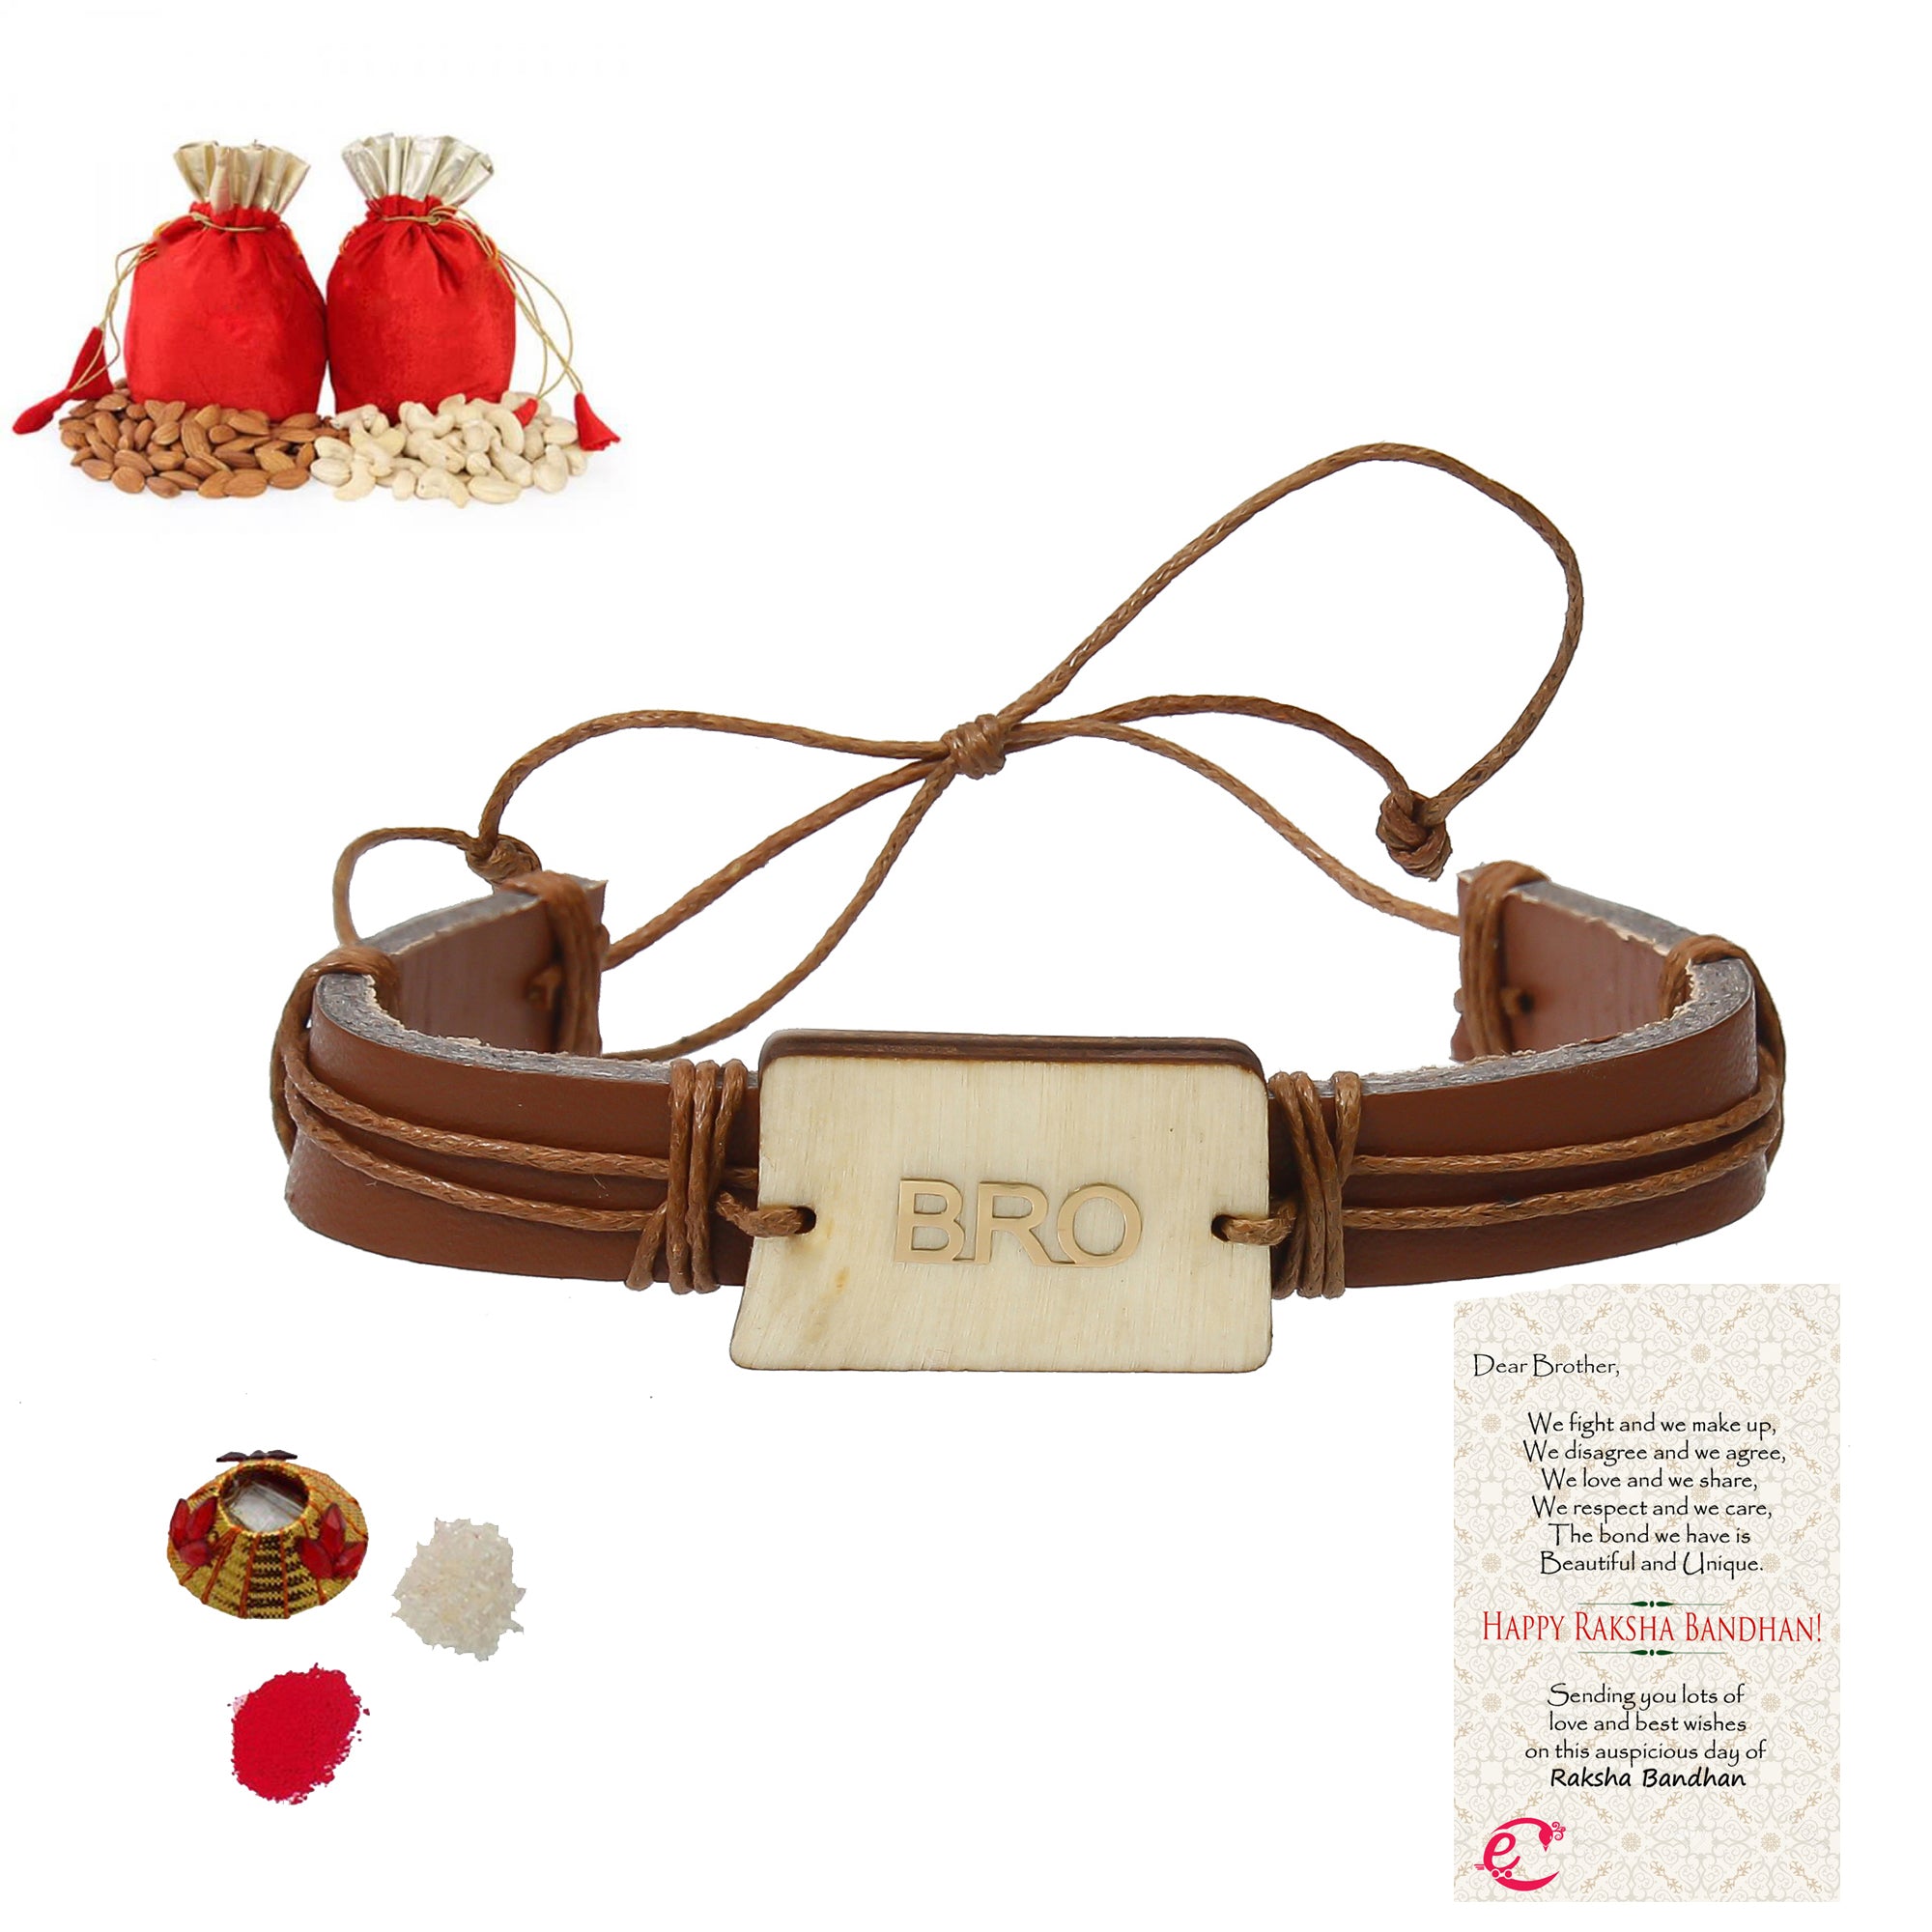 Designer Leather Bracelet BRO Rakhi with Badam and Cashew (200 gm each, total 400 gm) and Roli Tikka Matki, Best Wishes Greeting Card